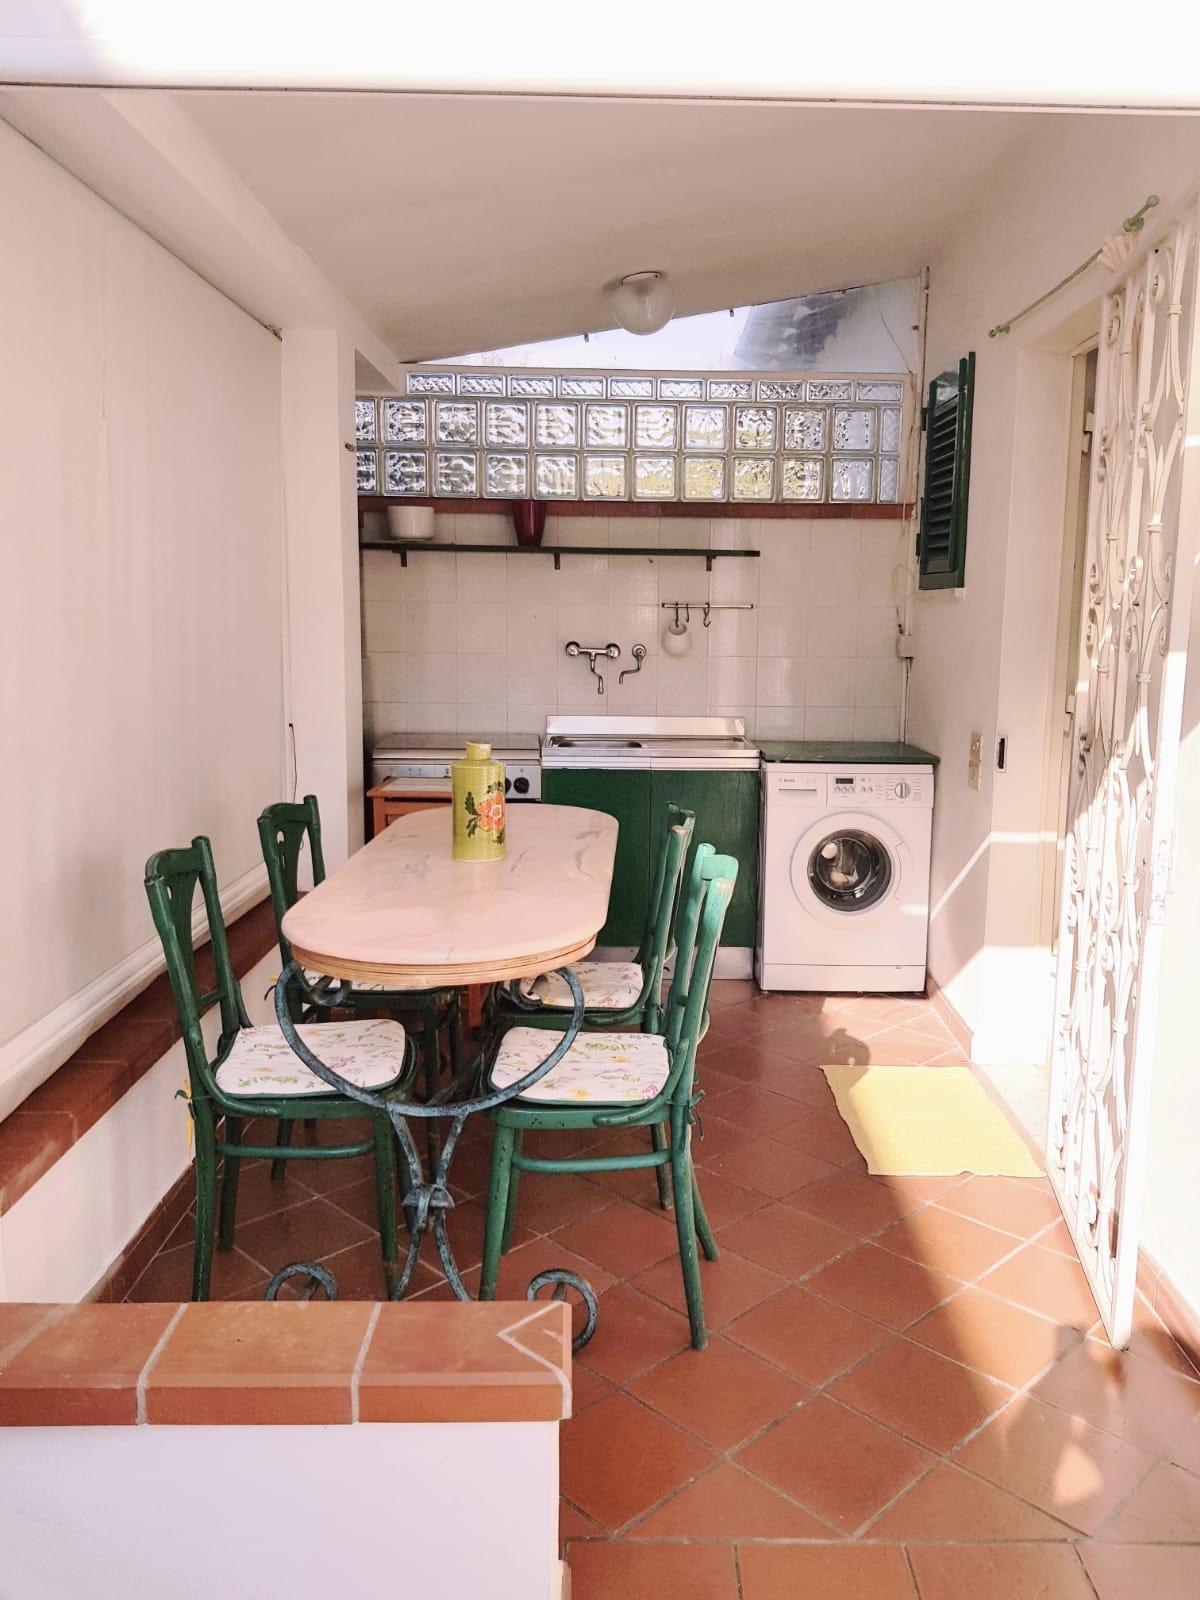 Casa singola in affitto - Tonfano, Pietrasanta